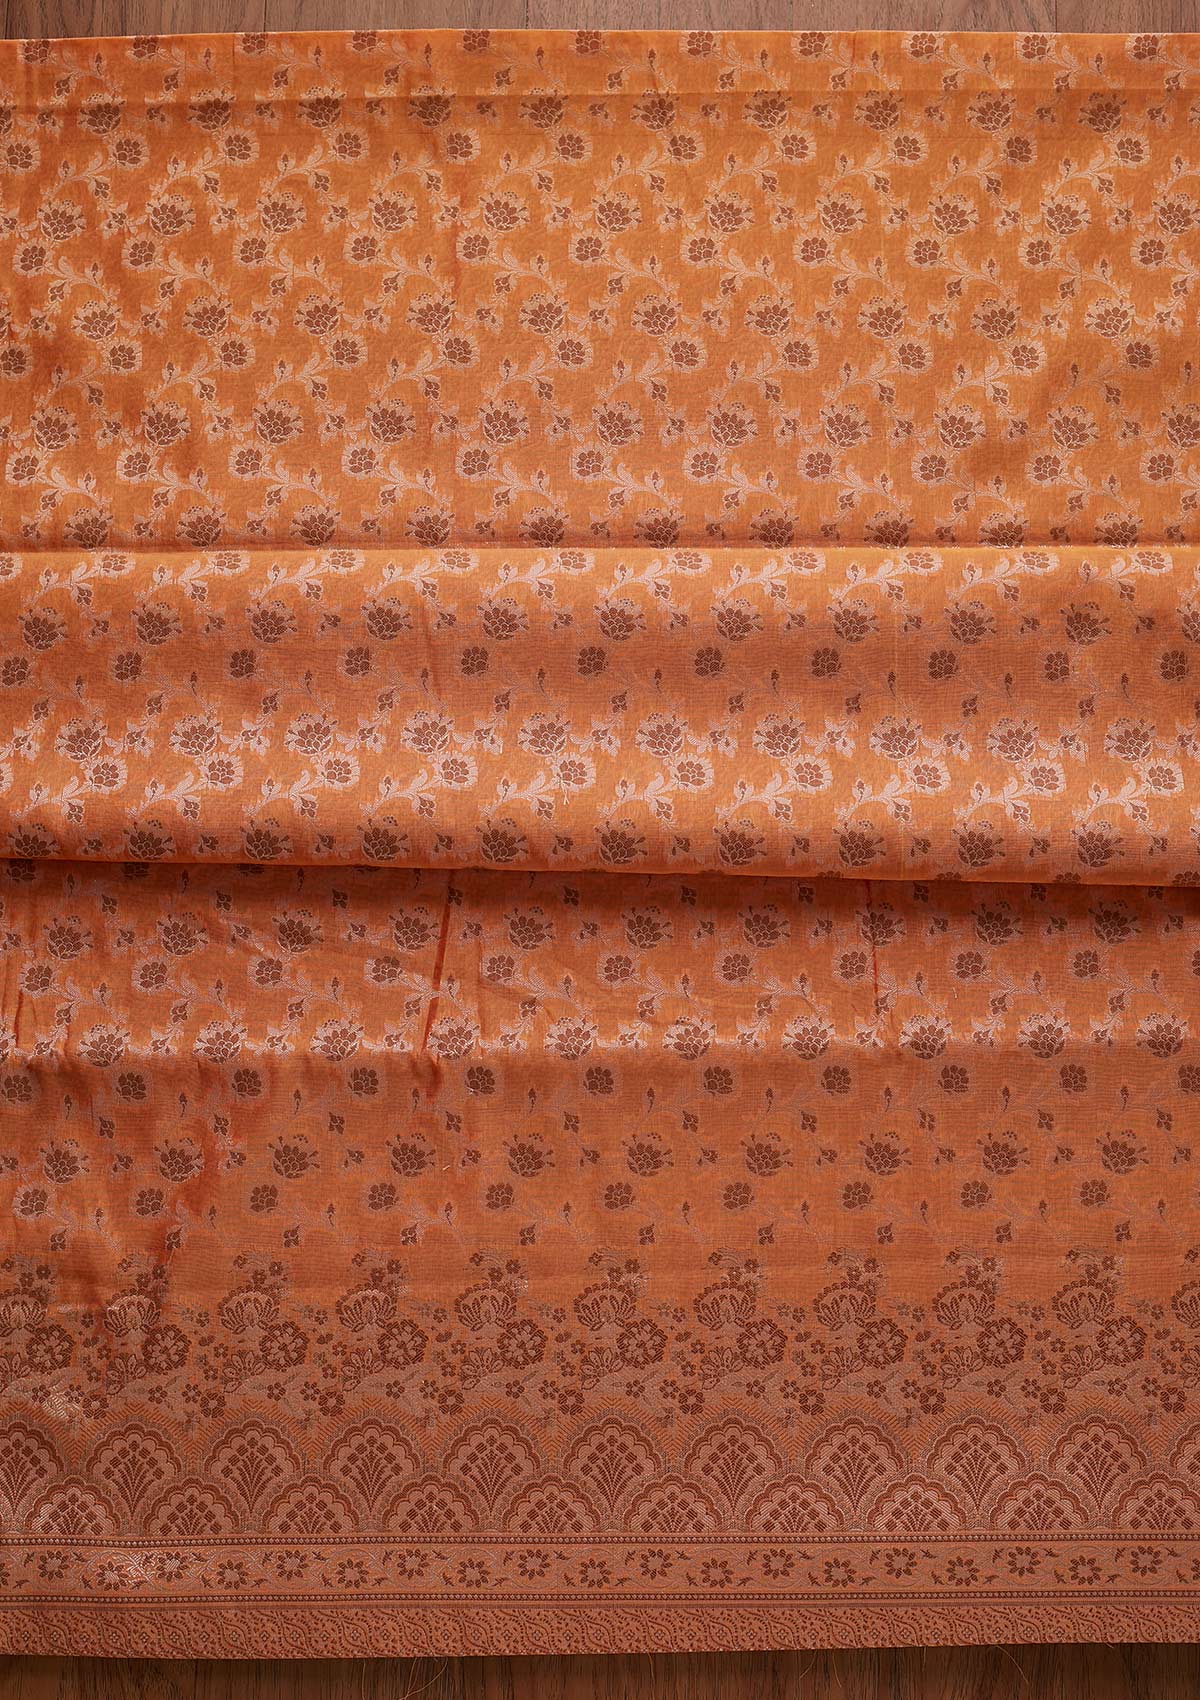 Orange Zariwork Banarasi Designer Unstitched Salwar Suit - koskii